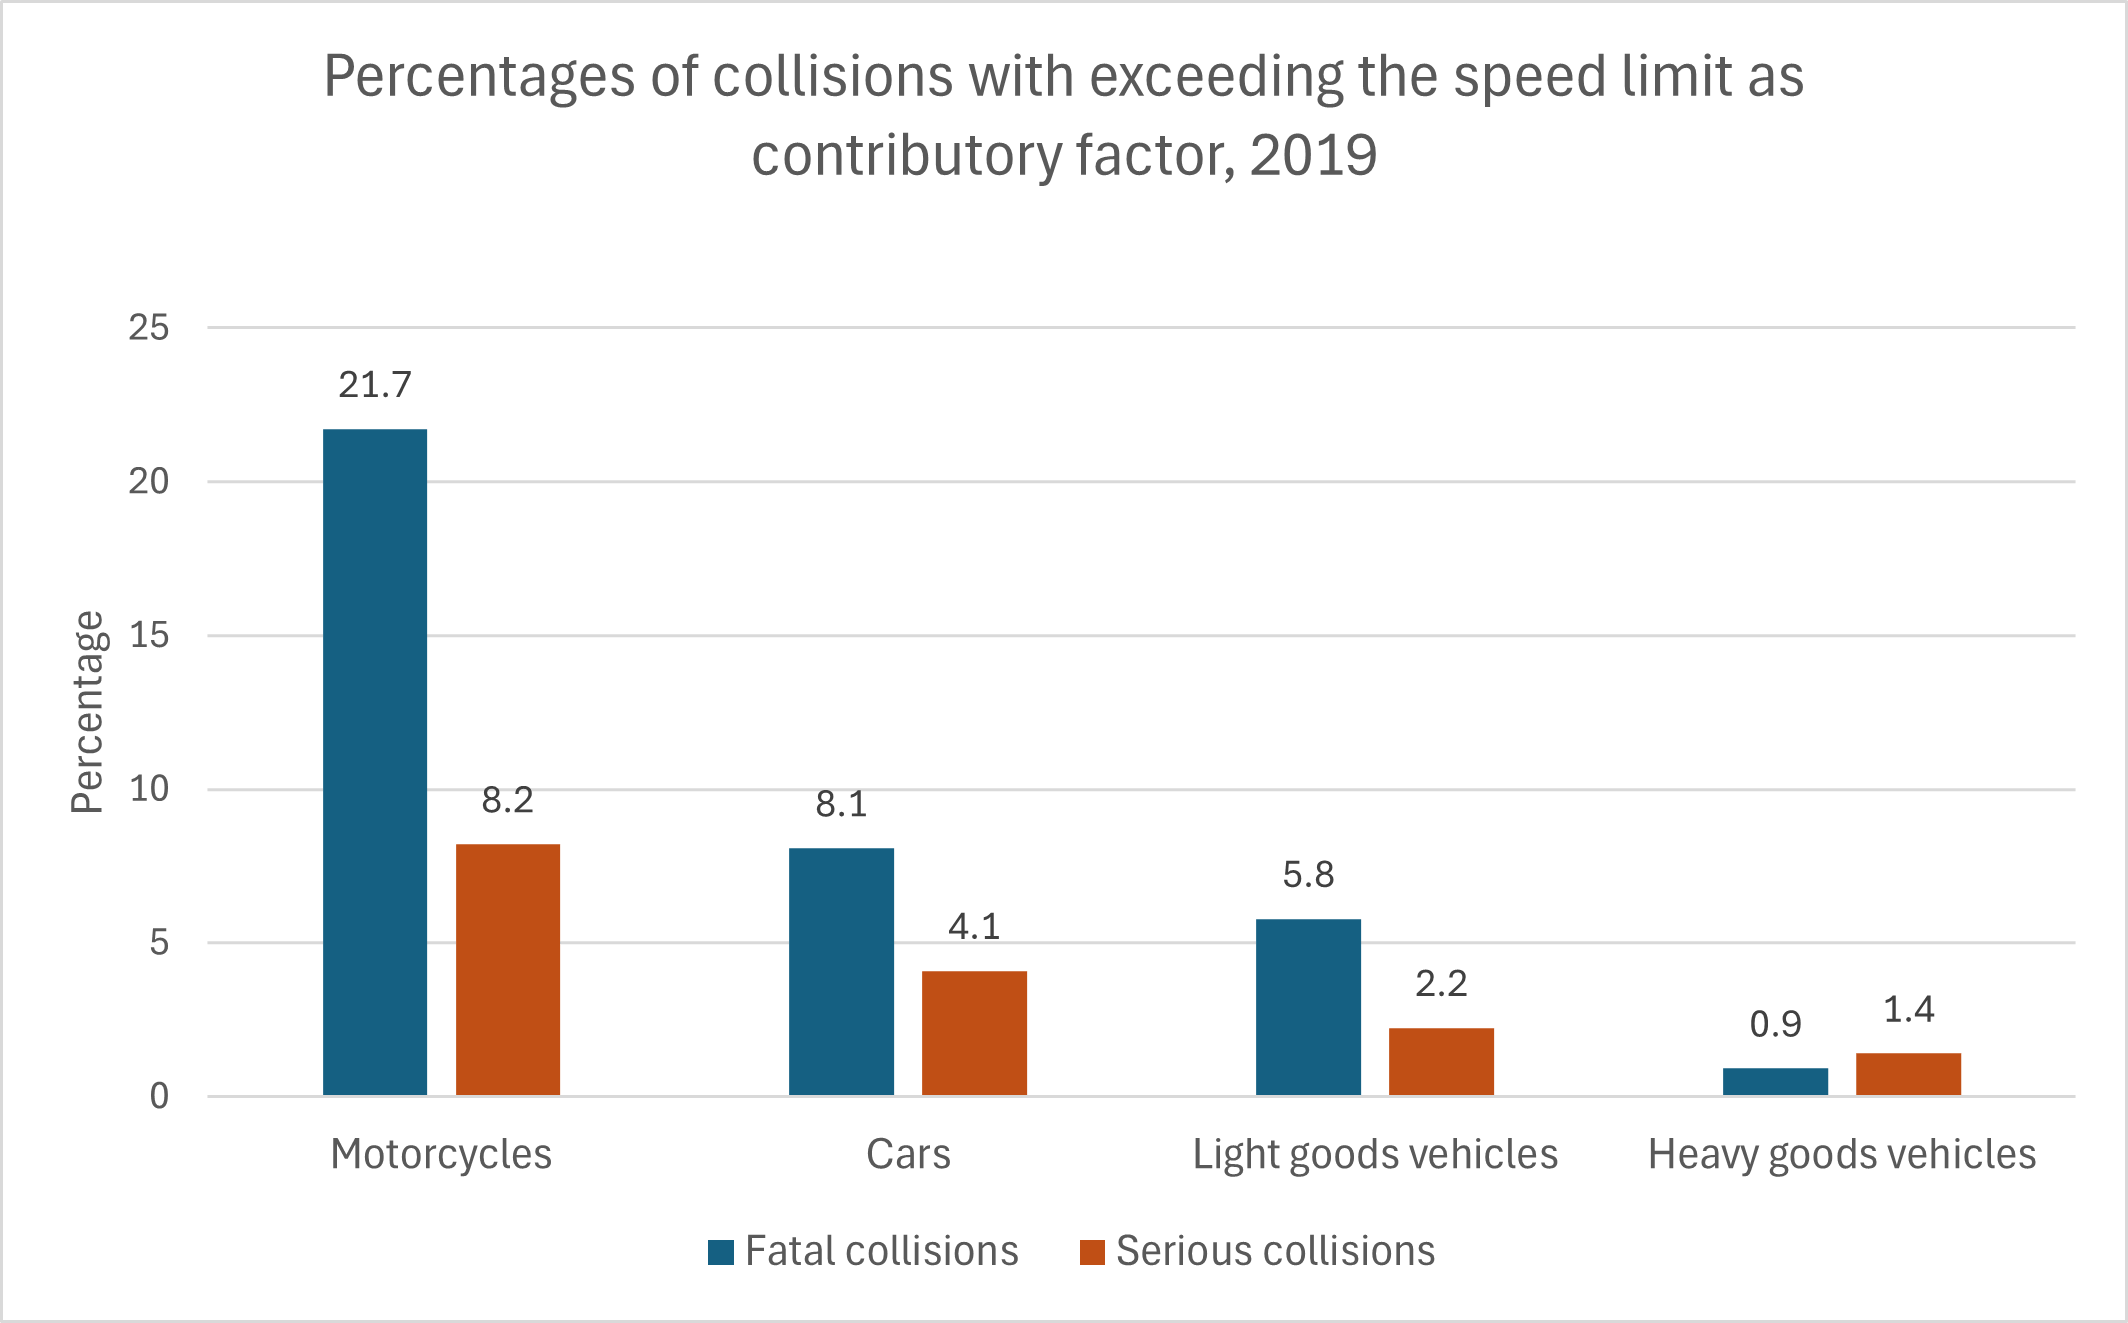 KSI collisions caused by speeding